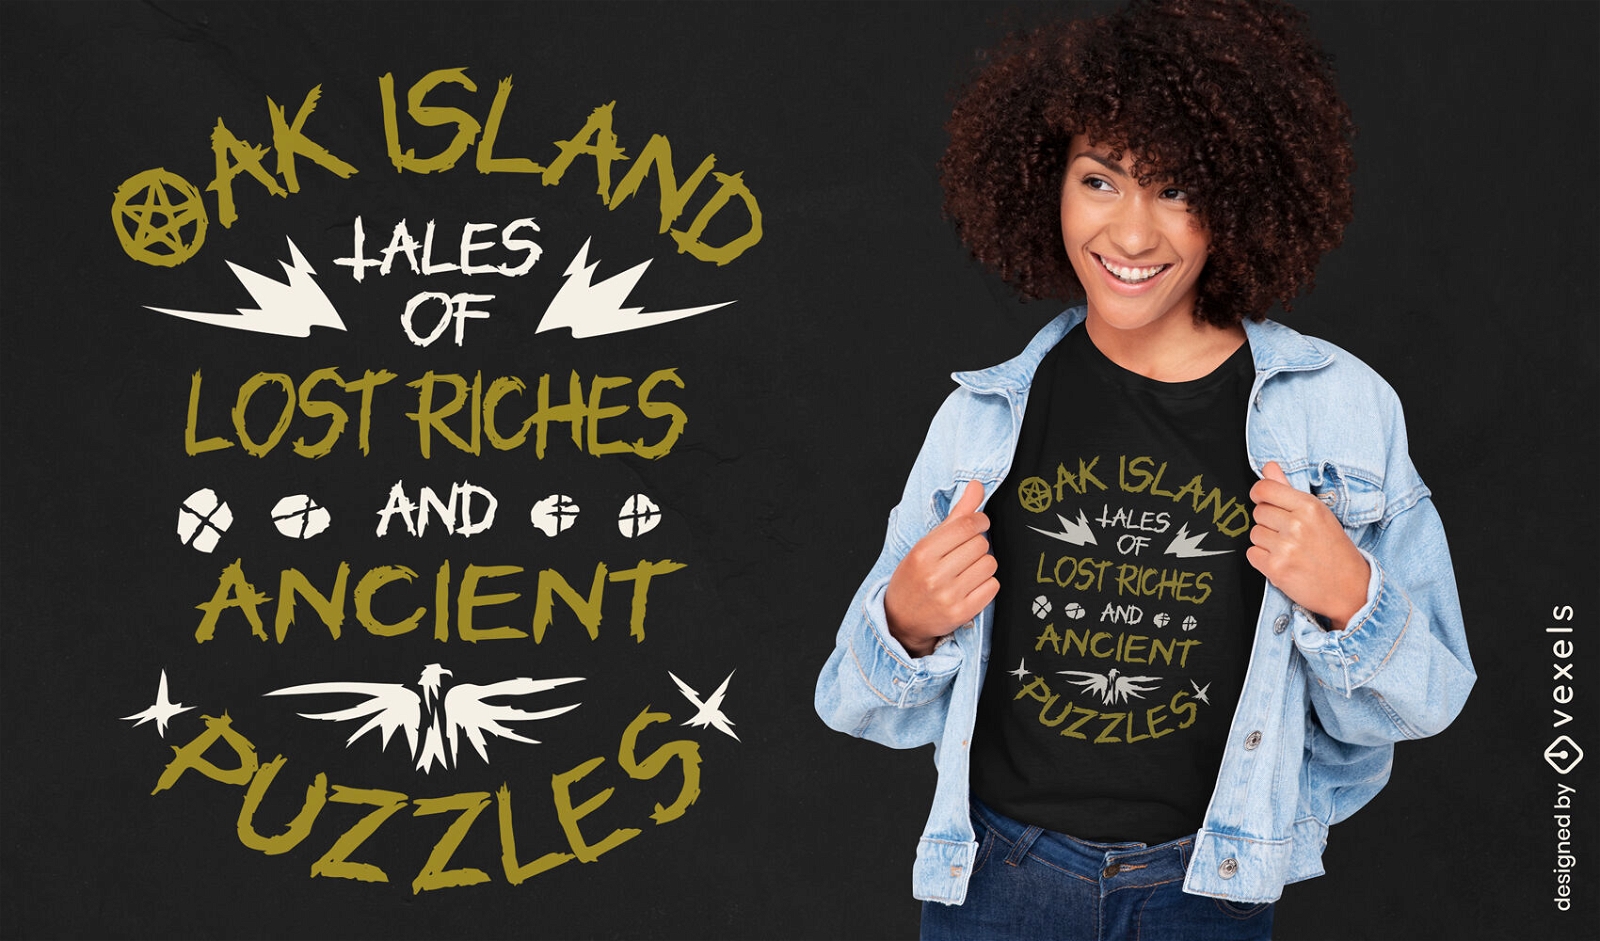 Oak Island schätzt das T-Shirt-Design mit antiken Rätseln